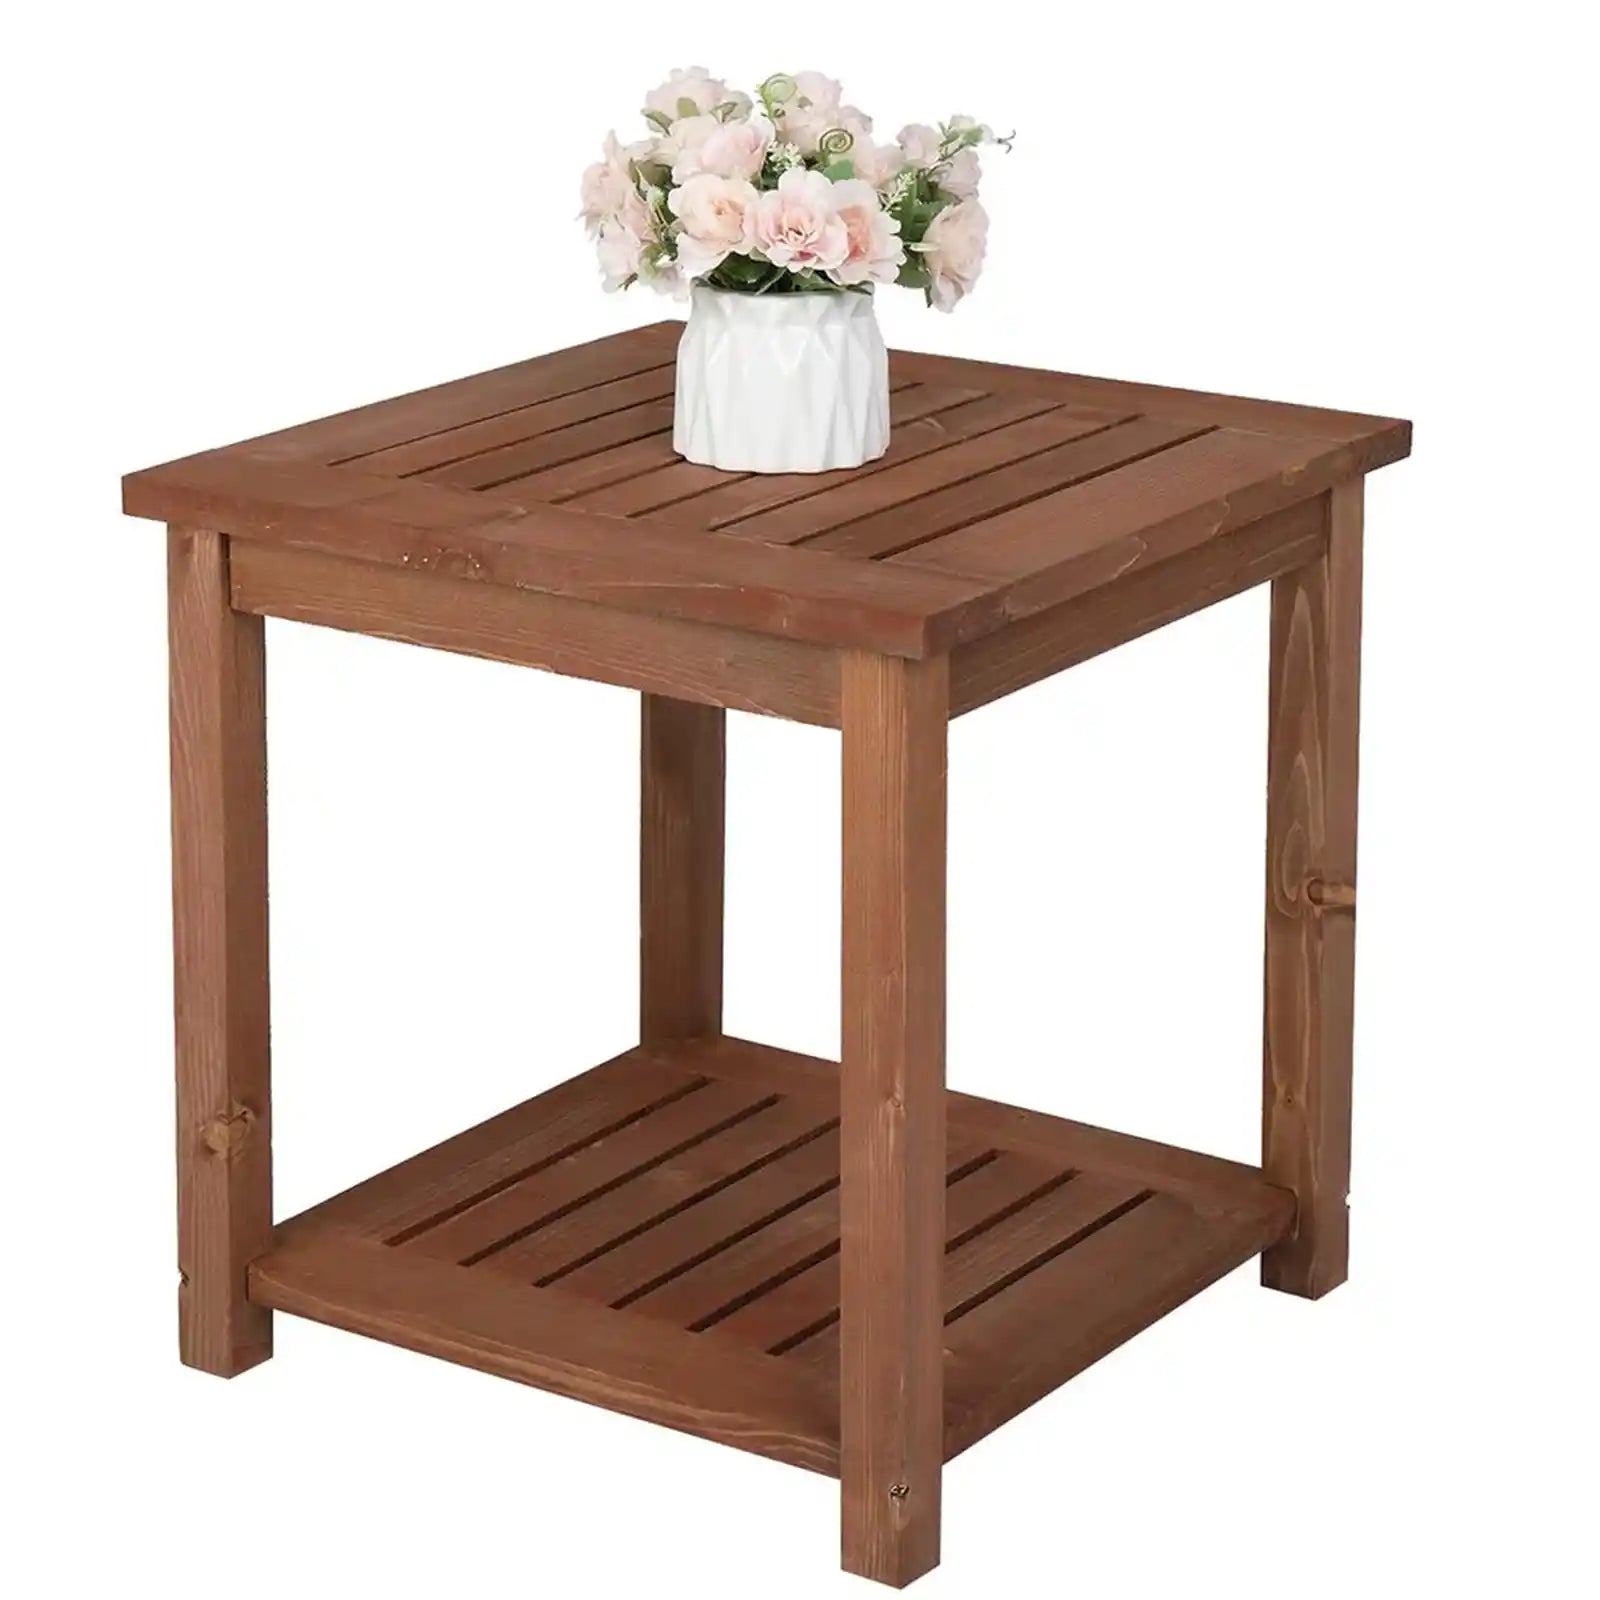 Muebles de jardín Mesa auxiliar de madera para exteriores, natural, abeto chino, gris, cuadrada 